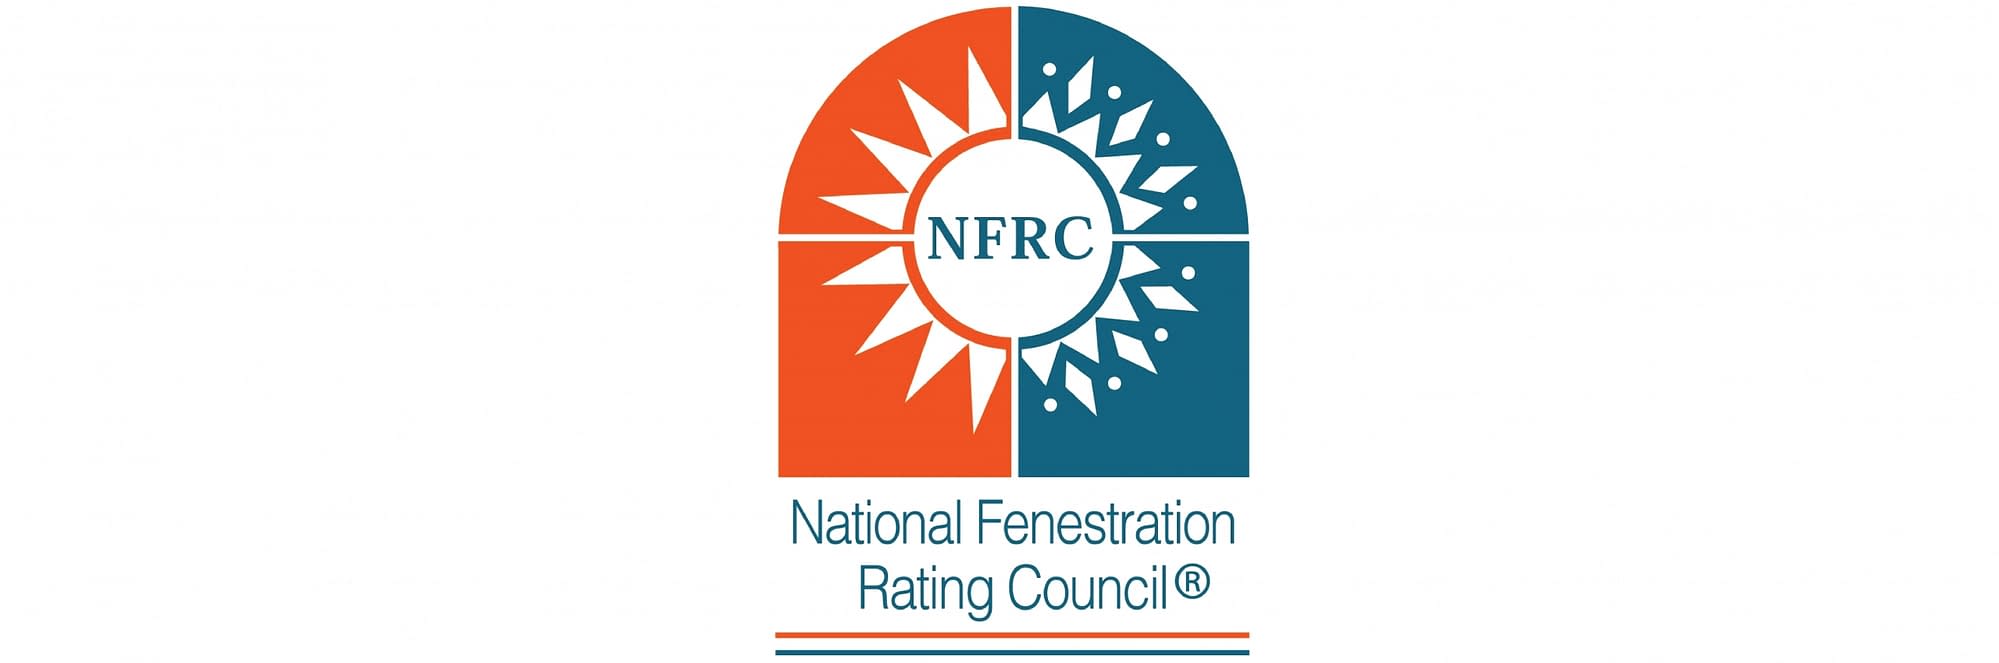 NFRC Certification logo